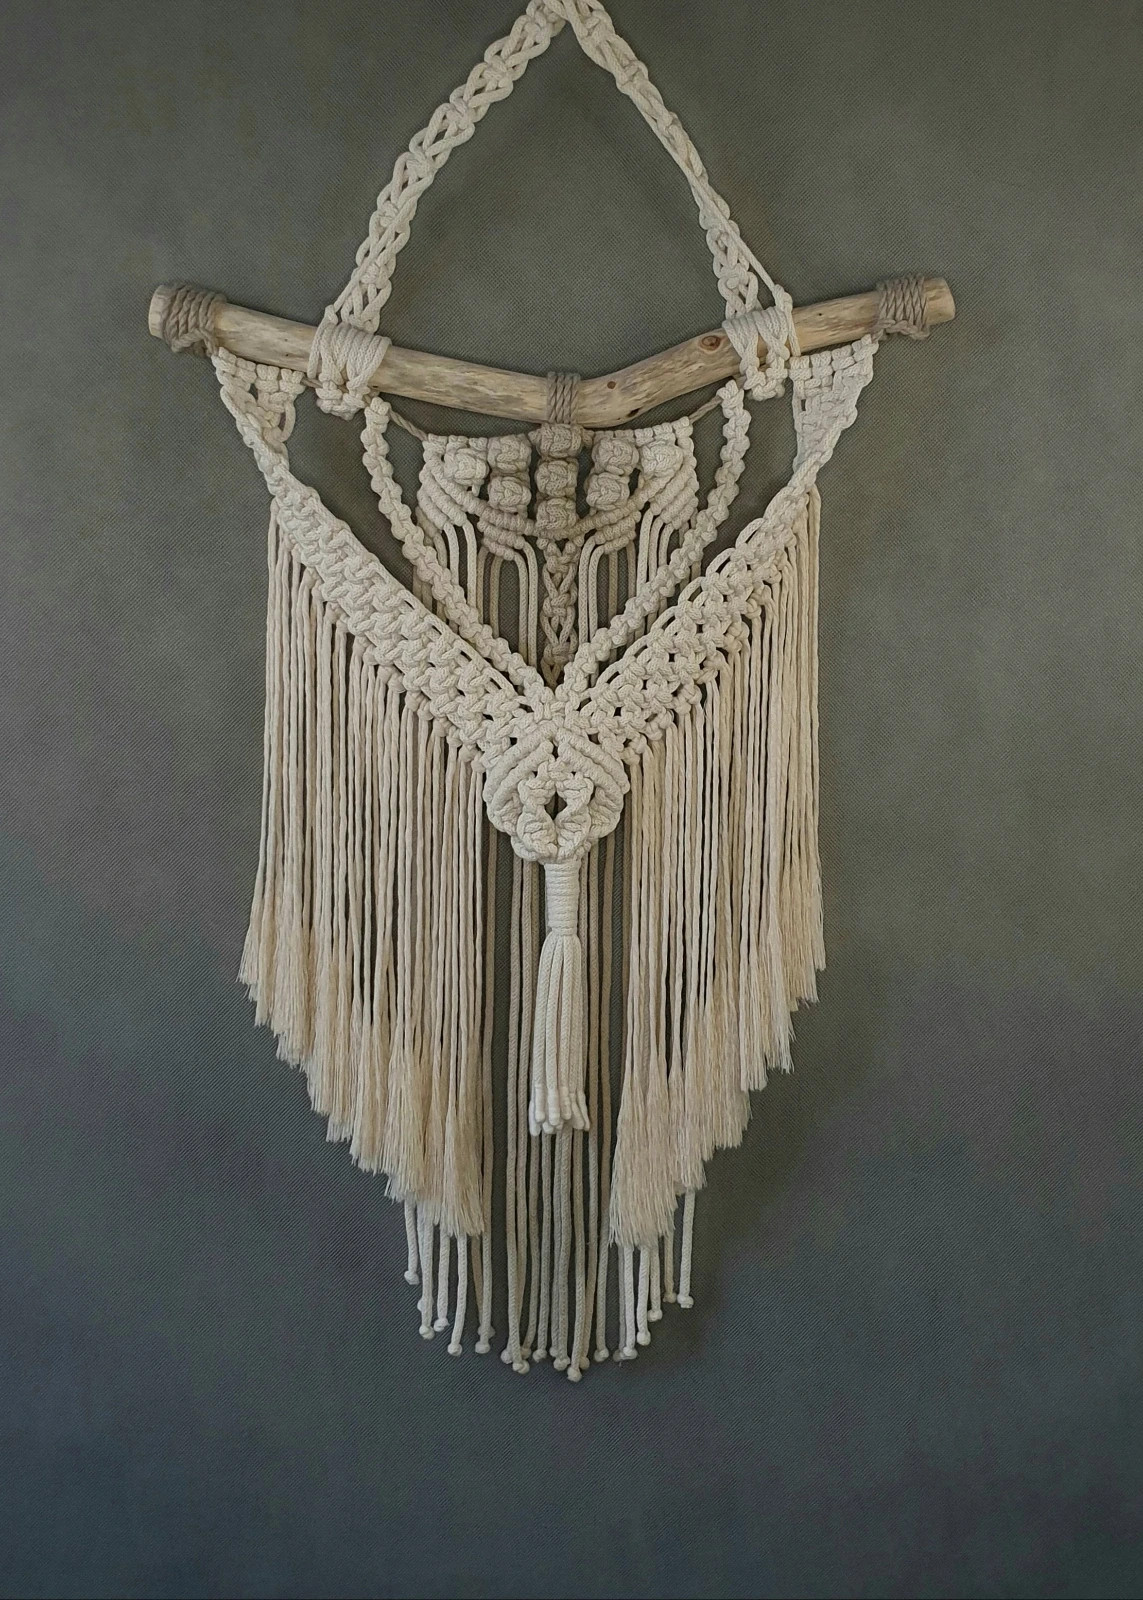 makrama makatka ozdoba wall hanging drewno handmade diy craft